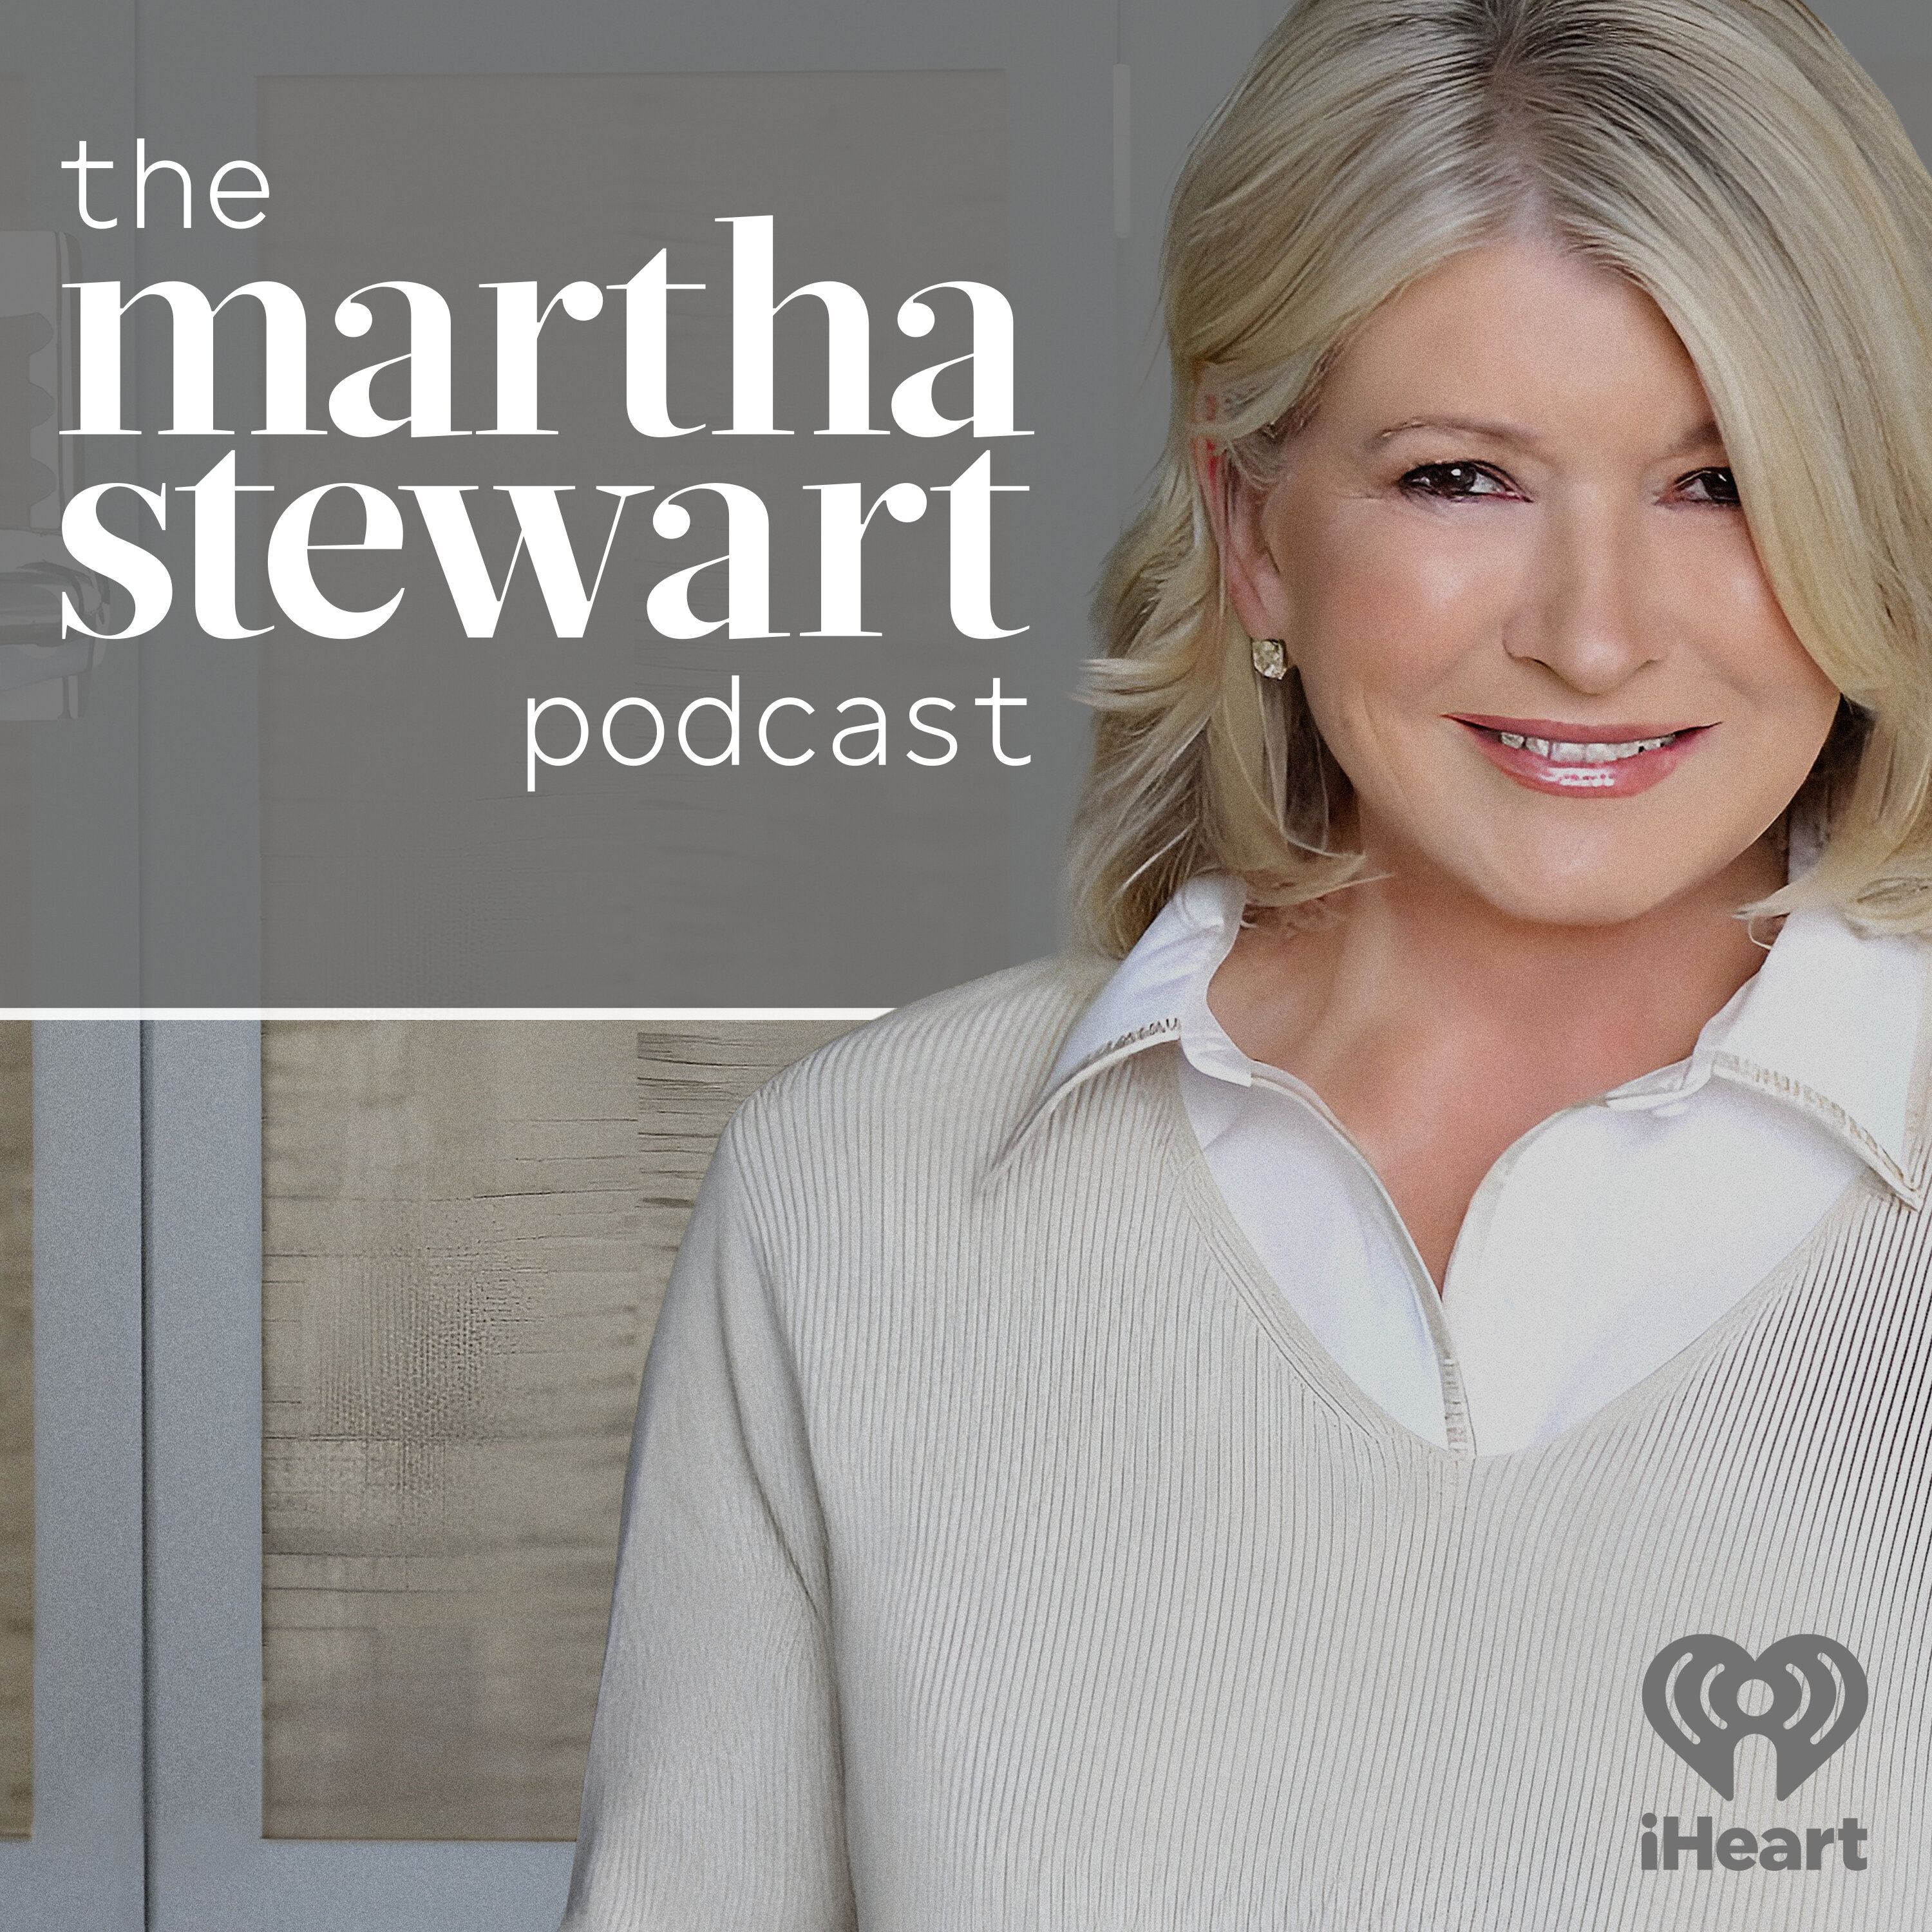 The Martha Stewart Podcast podcast show image